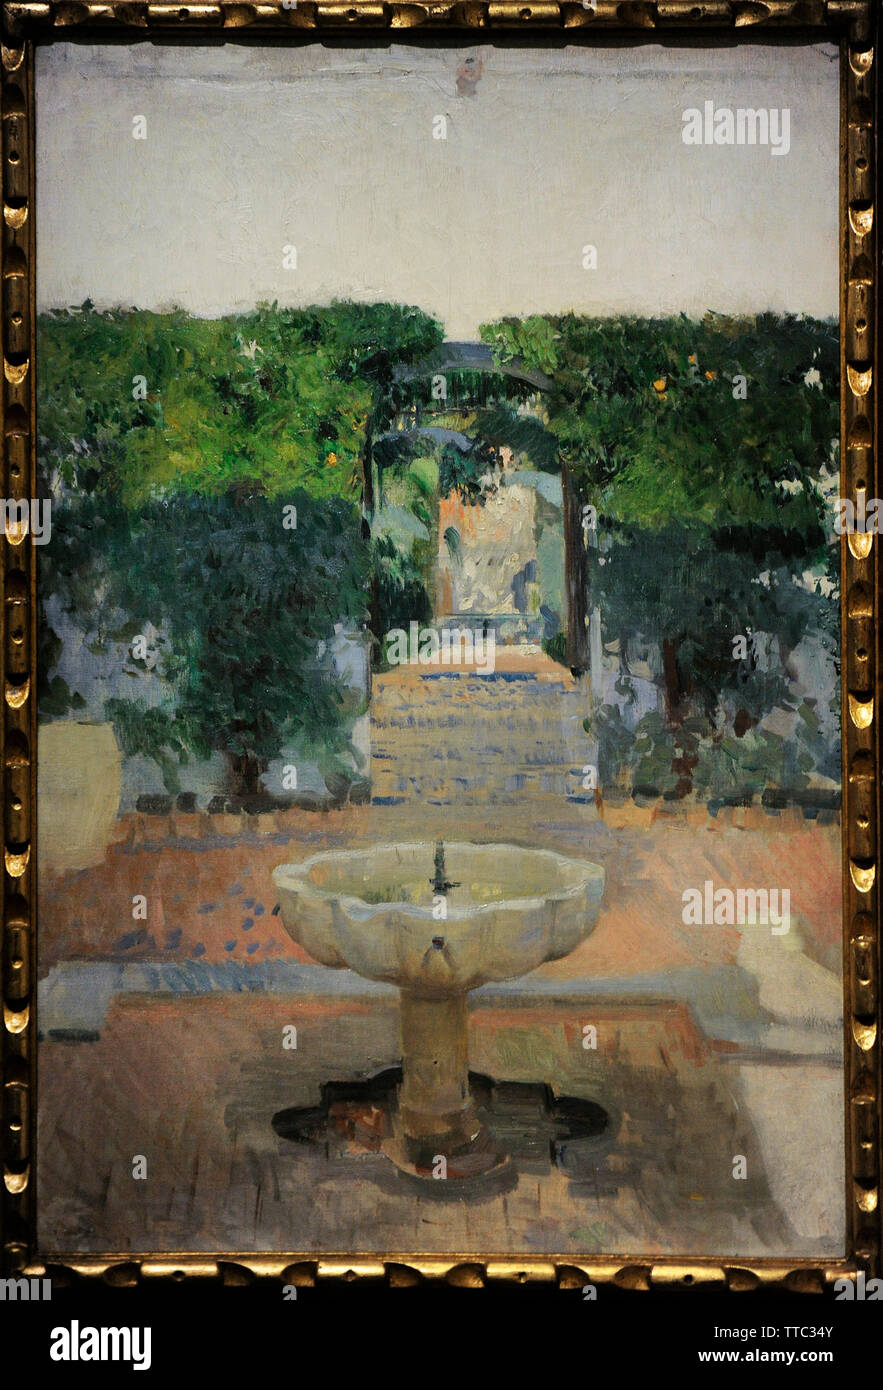 Joaquin Sorolla y Bastida (1863-1923). Spanish painter. Arab Fountain at the Alcazar of Seville, 1910 (Fuente arabe del Alcazar de Sevilla, 1910). Oil on canvas, 95 x 63,50 cm. Sorolla Museum. Madrid. Spain. Stock Photo